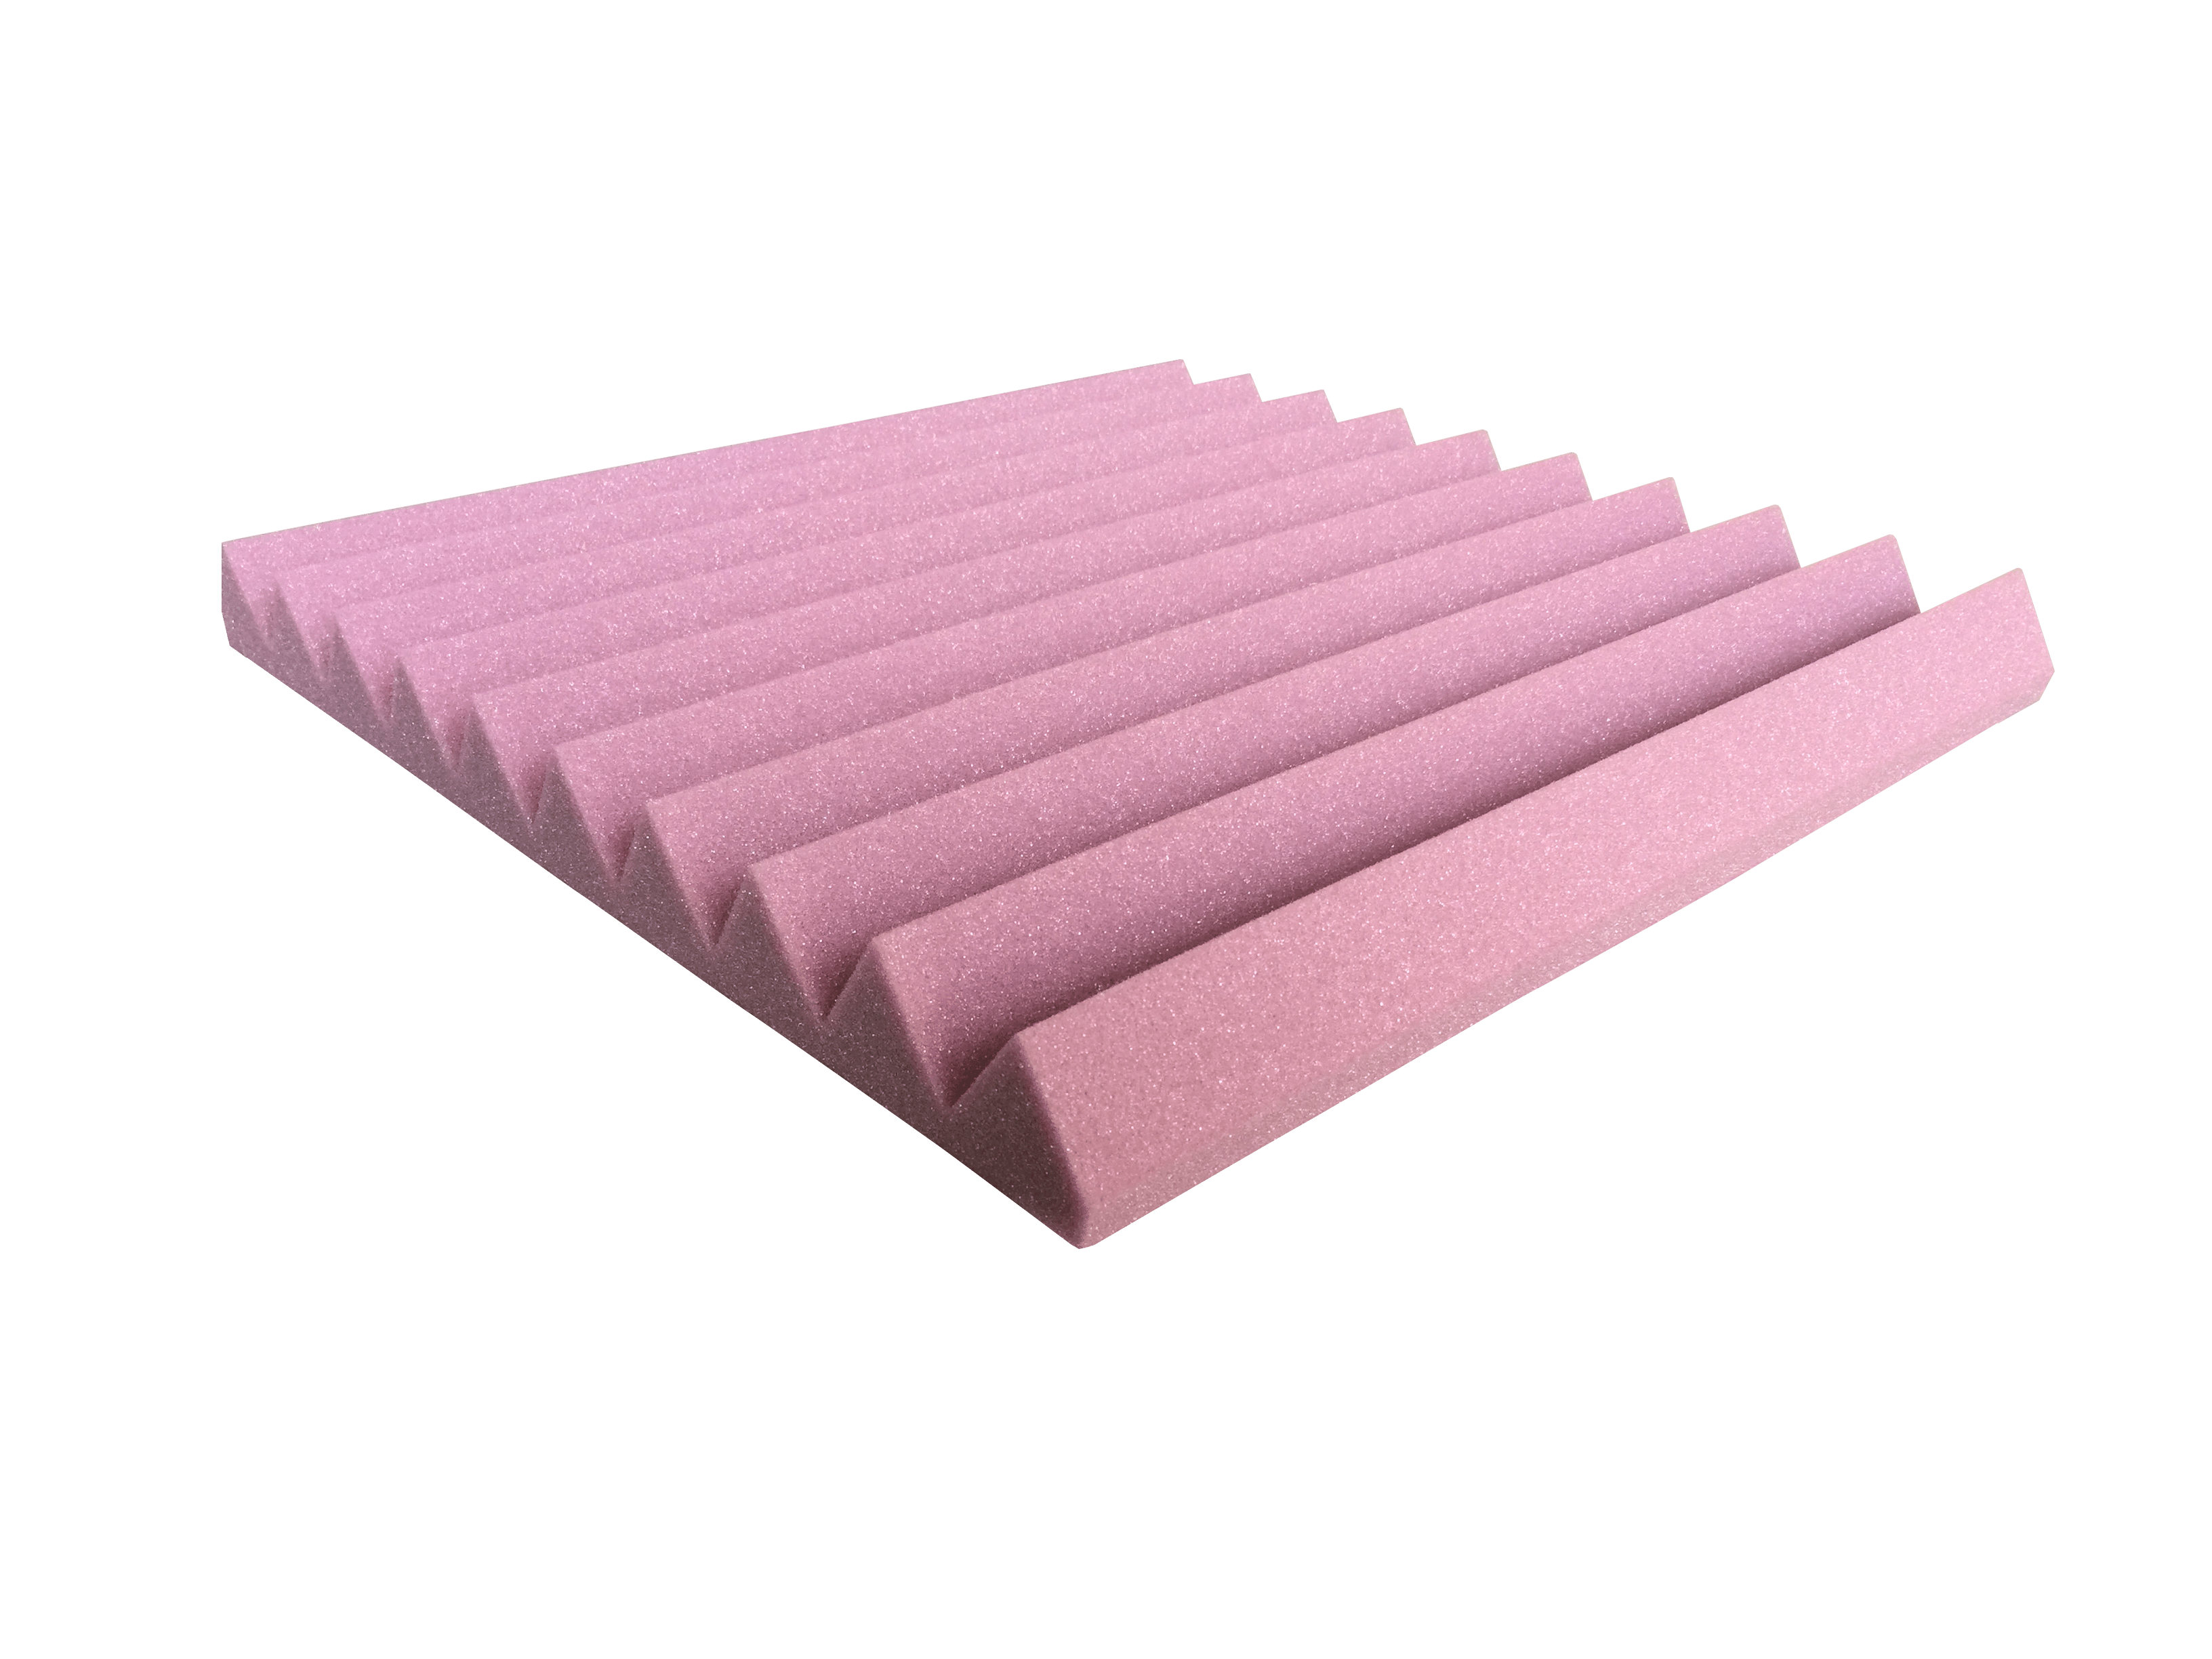 Arrowzoom Acoustic Wedge Tiles Foam - Solid Colors - KK1134 Burgundy / 1 Piece - 50 x 50 x 5 cm / 20 x 20 x 2 in